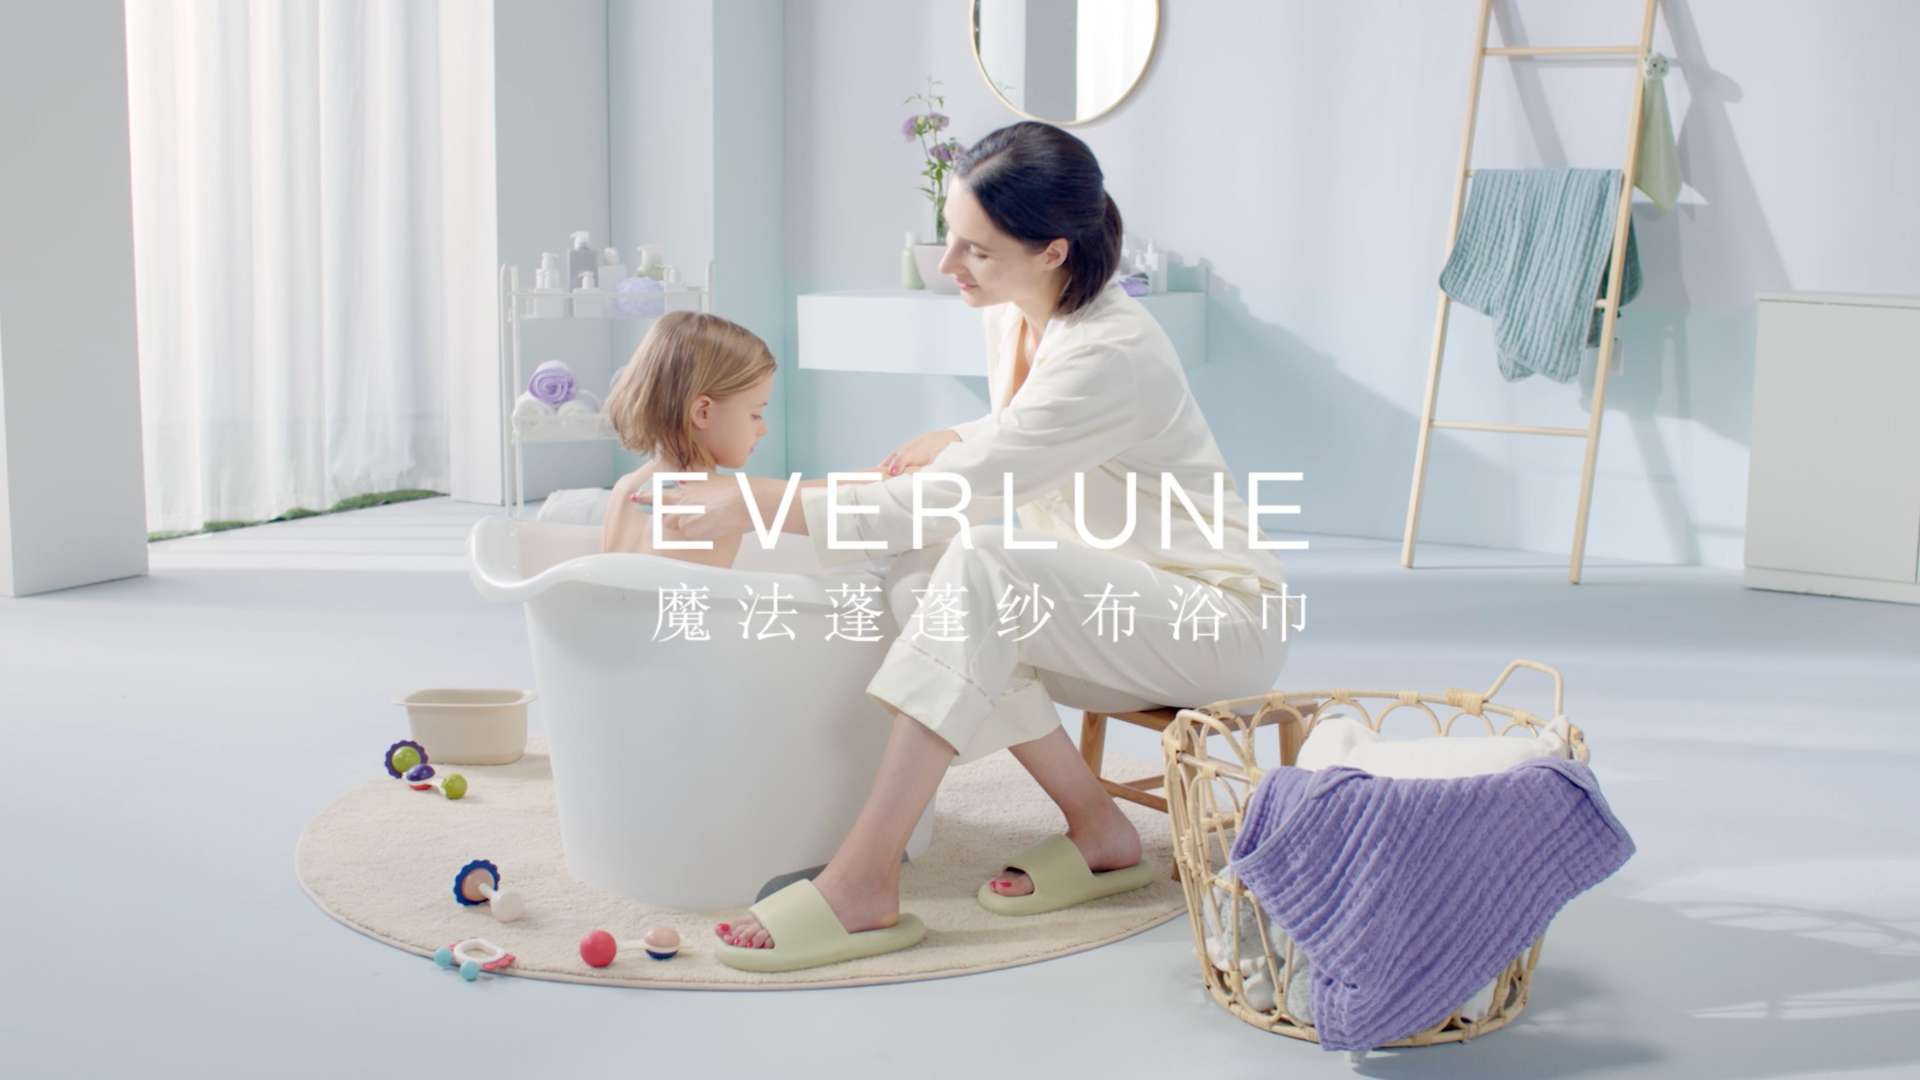 EVERLUNE| 儿童魔法浴巾 ✖ 电商视频